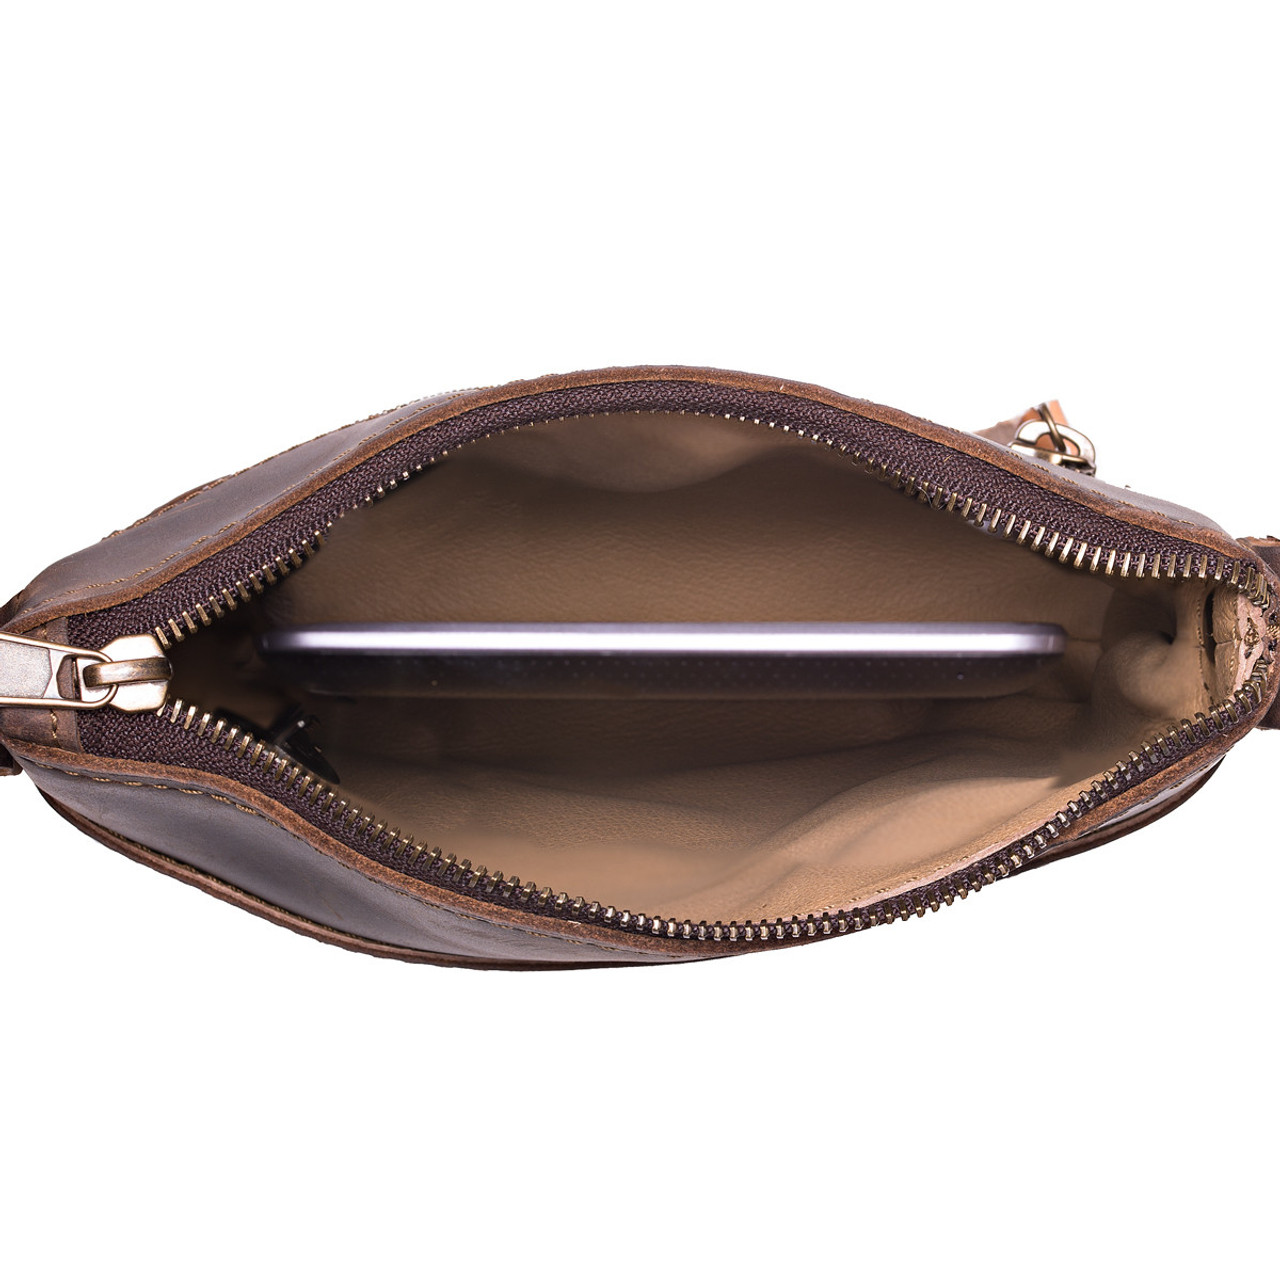 Emg6305 Zipper Luxury Leather Change Purses Pouch Wallet